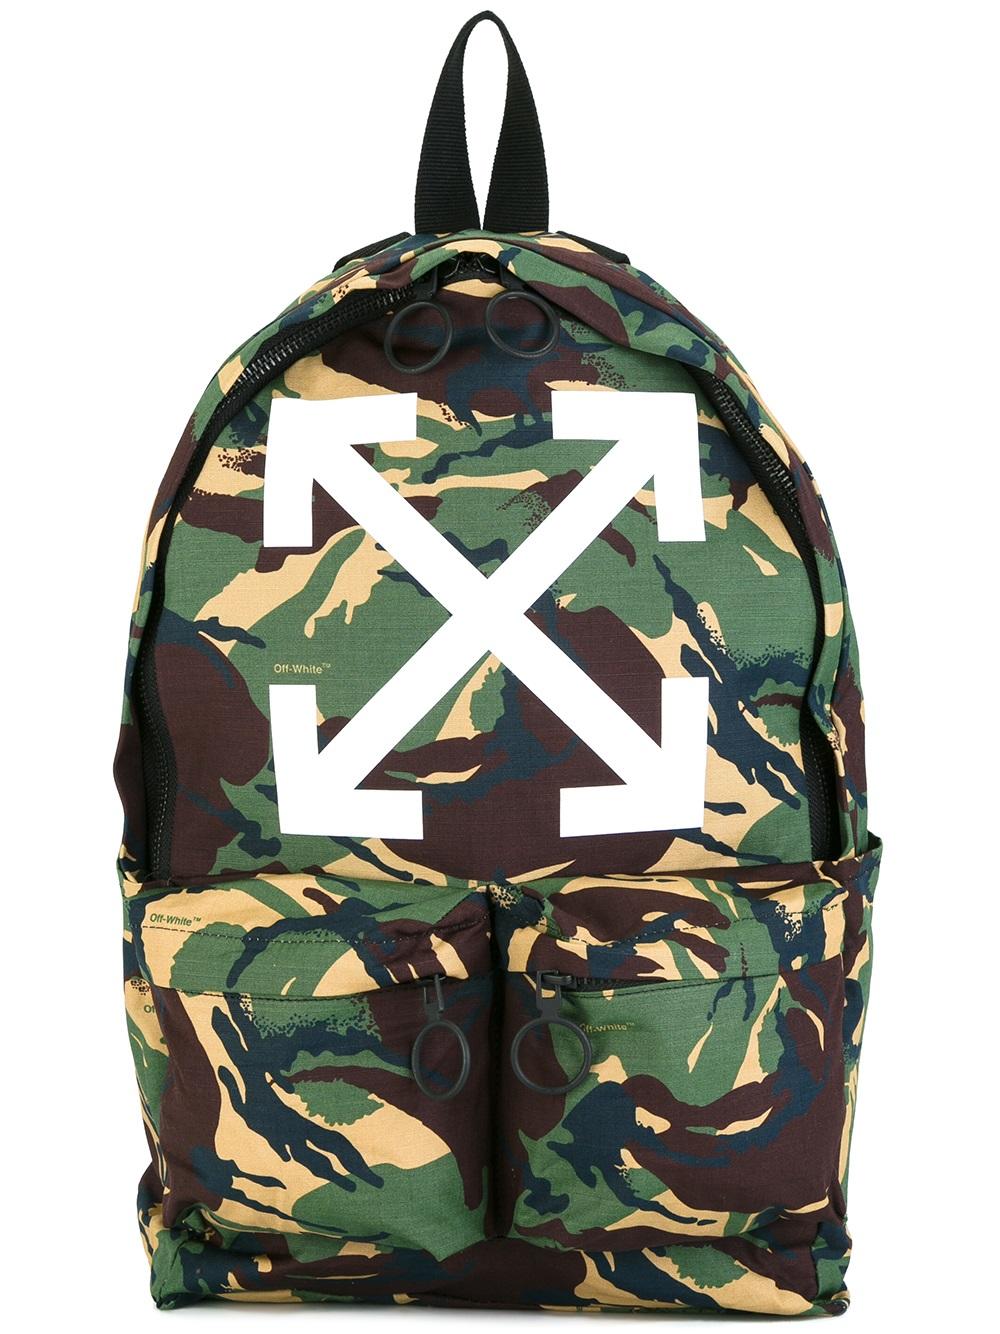 Off-White camouflage print backapck 9901 Men Bags Backpacks